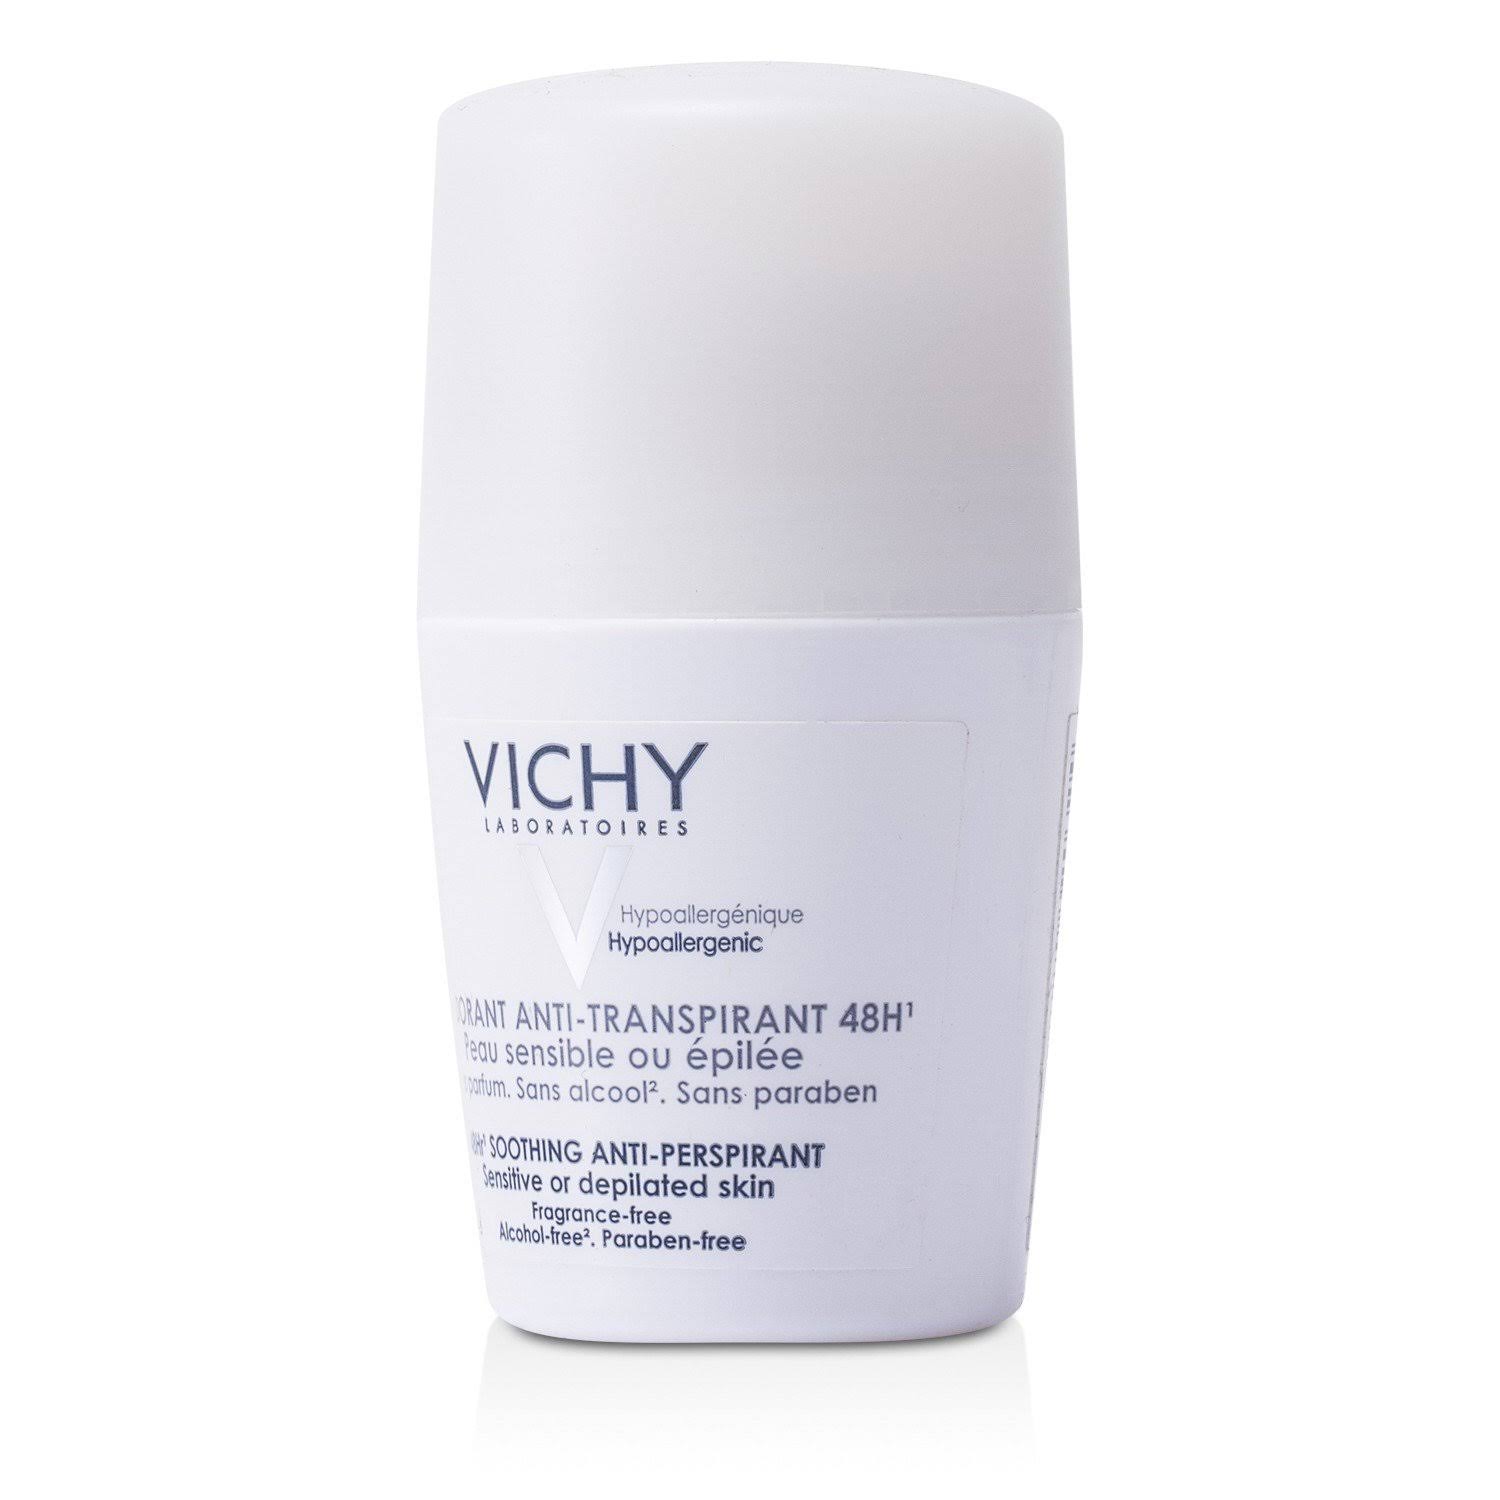 Vichy Deodorant 48 Hour Anti-Perspirant Roll On - Sensitive Skin, 50ml